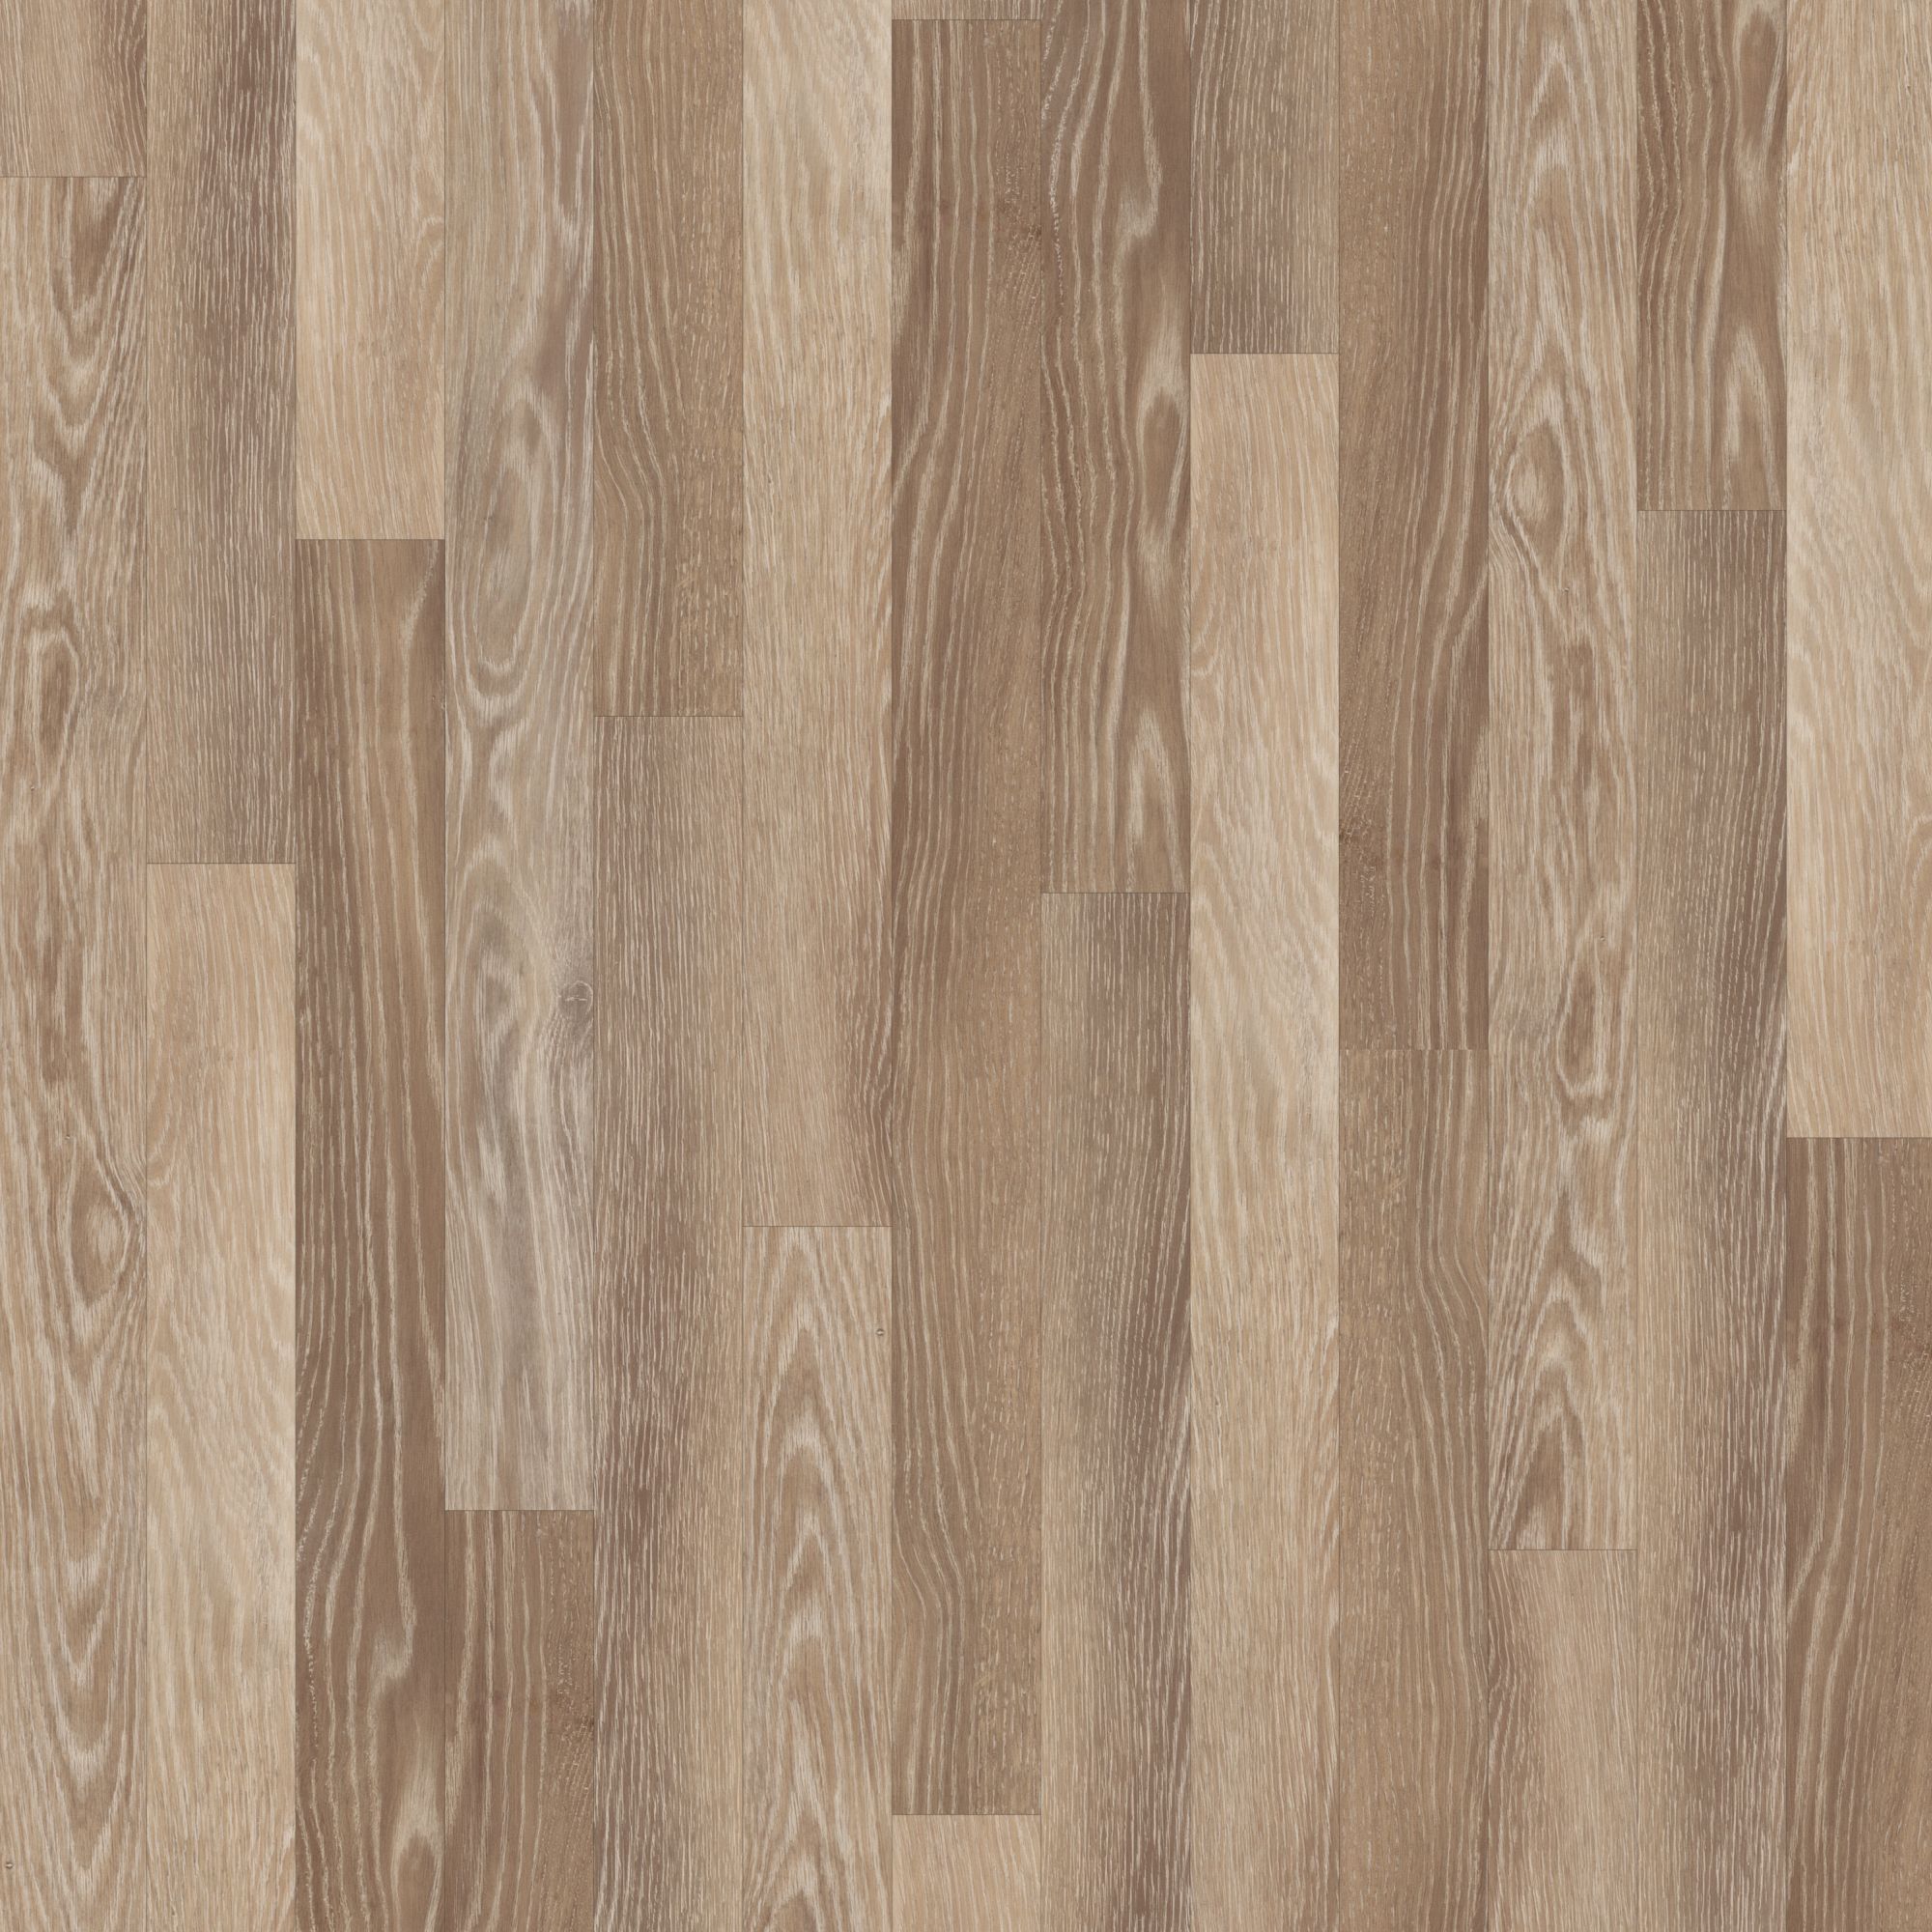 Karndean Da Vinci Wood Flooring